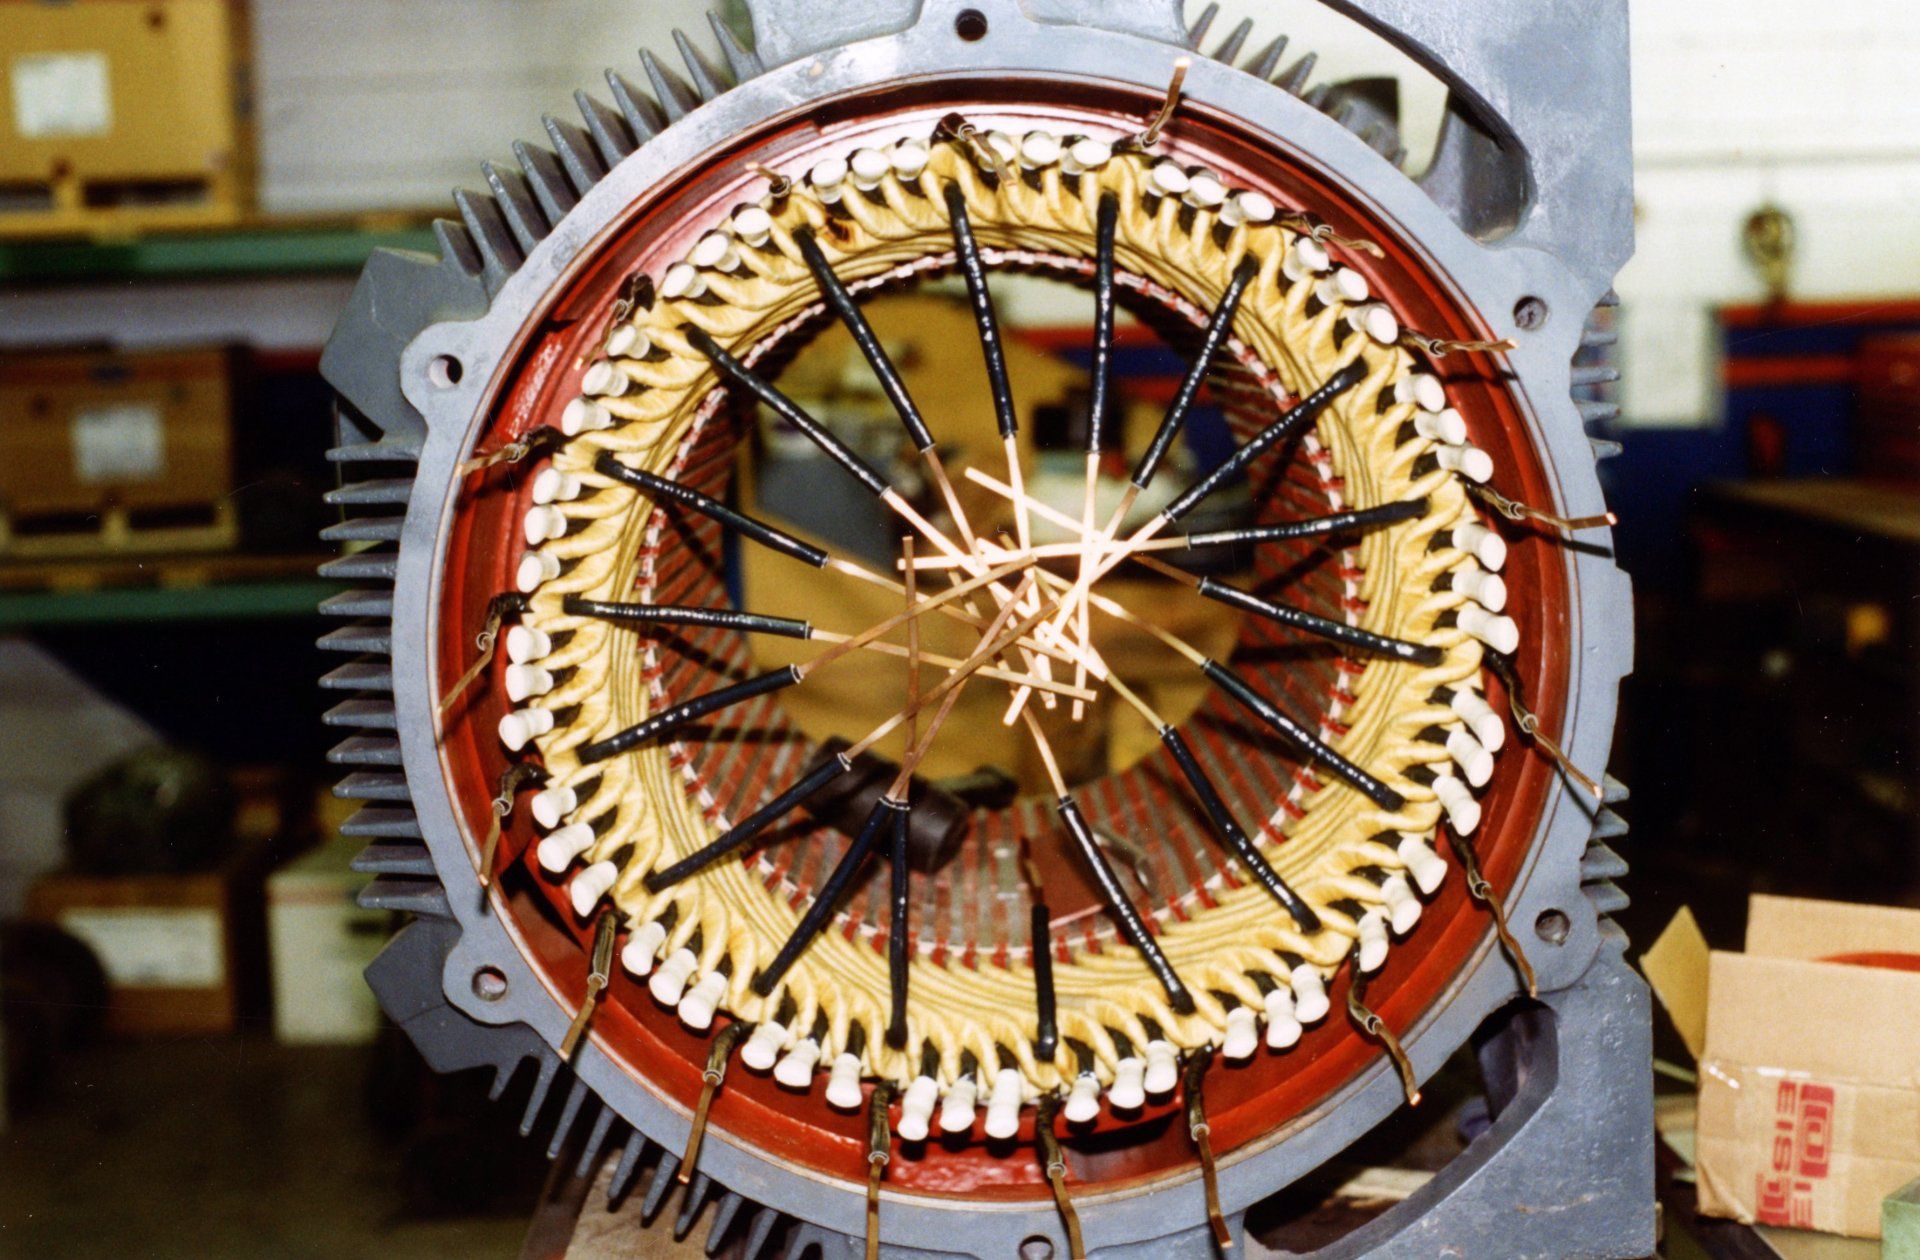 Motor rebuilds — Rewinding an Electric Motor in Sparks, NV